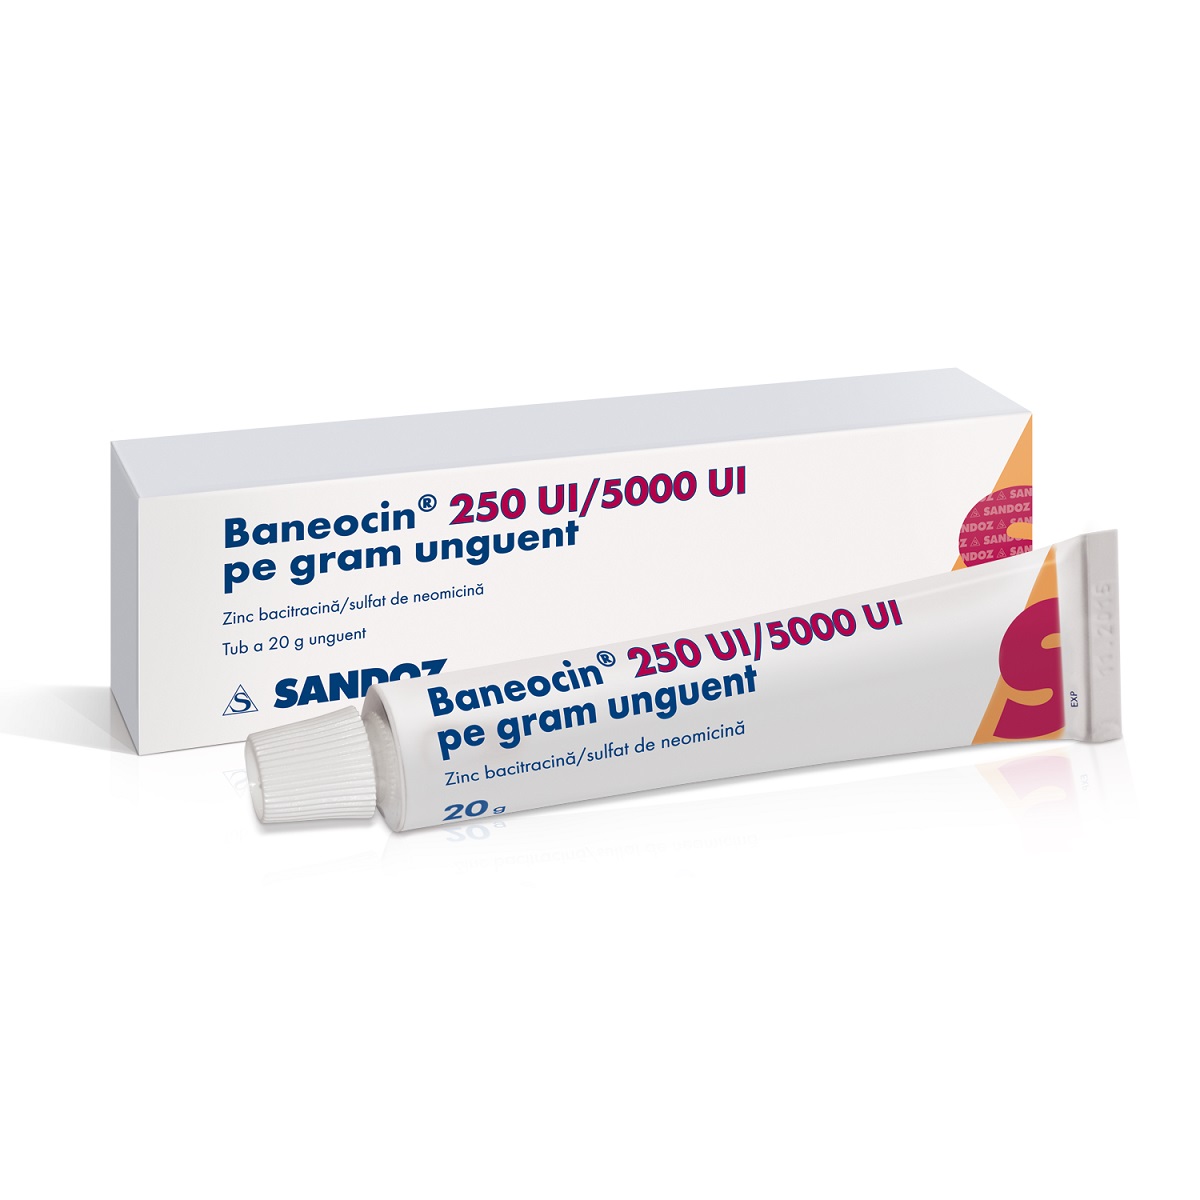 Antiseptice - Baneocin unguent, 250 UI/5000 UI pe gram, 20 g, Sandoz, nordpharm.ro